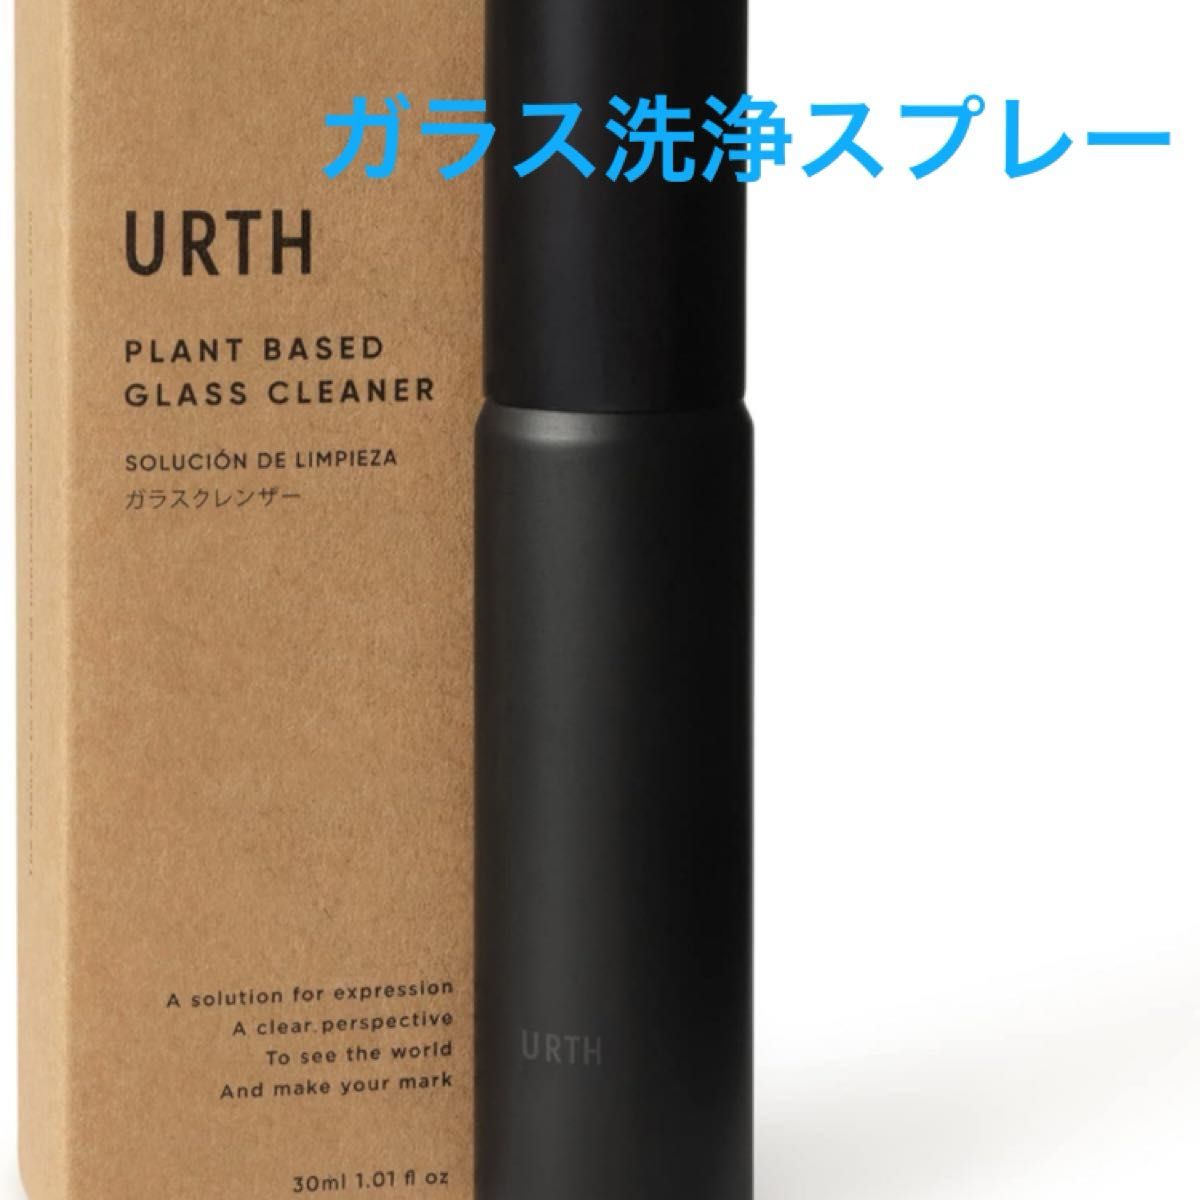 Urth ガラス洗浄スプレー 掃除用品 メガネクリーナー ガラスクリーナー 30ml